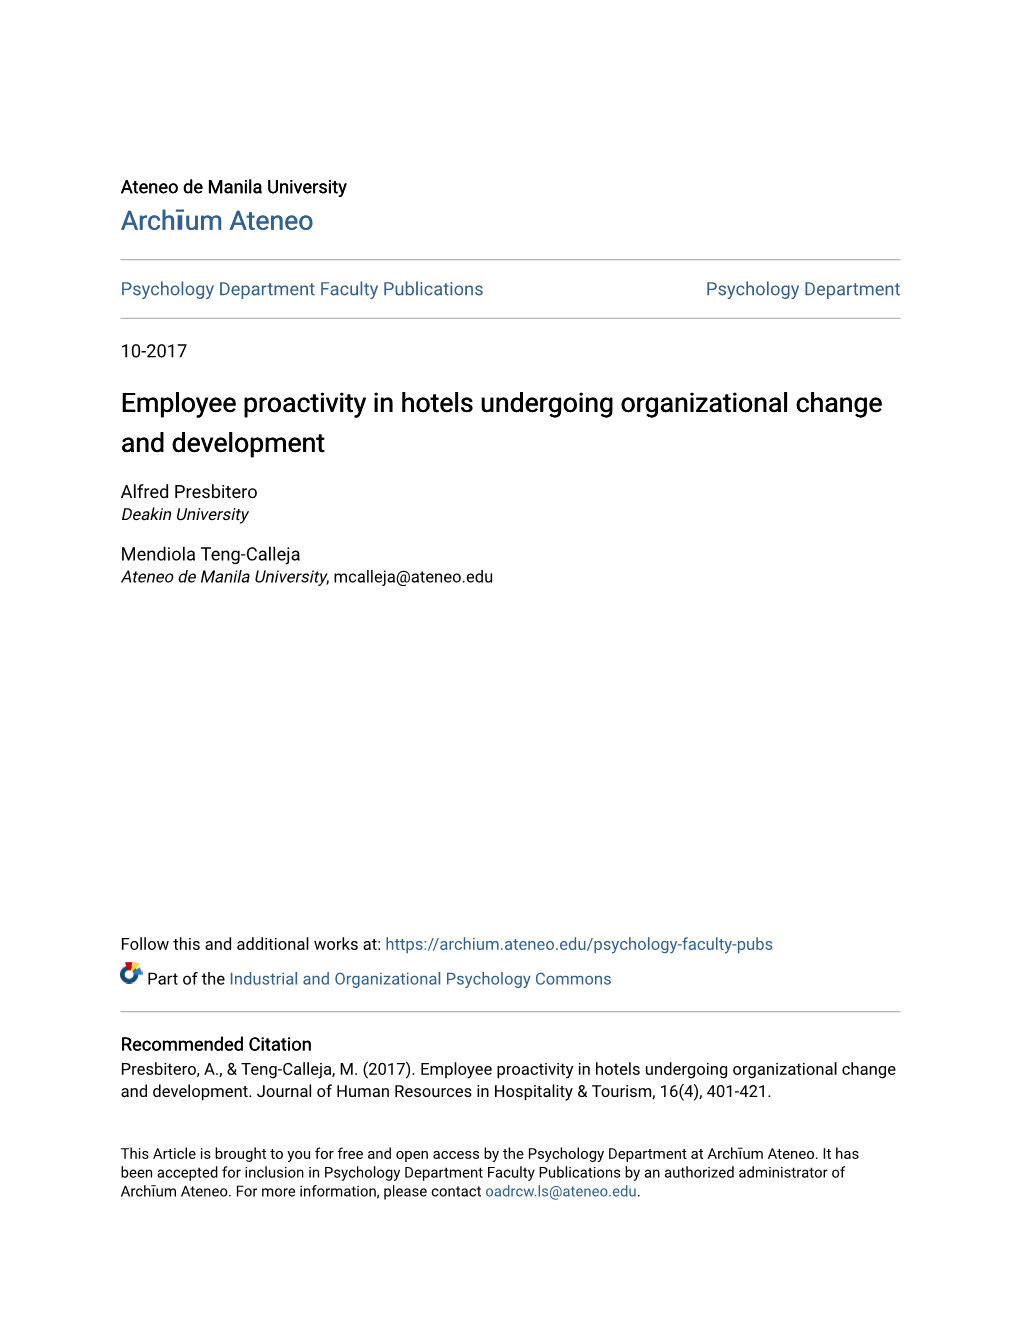 Employee Proactivity in Hotels Undergoing Organizational Change and Development